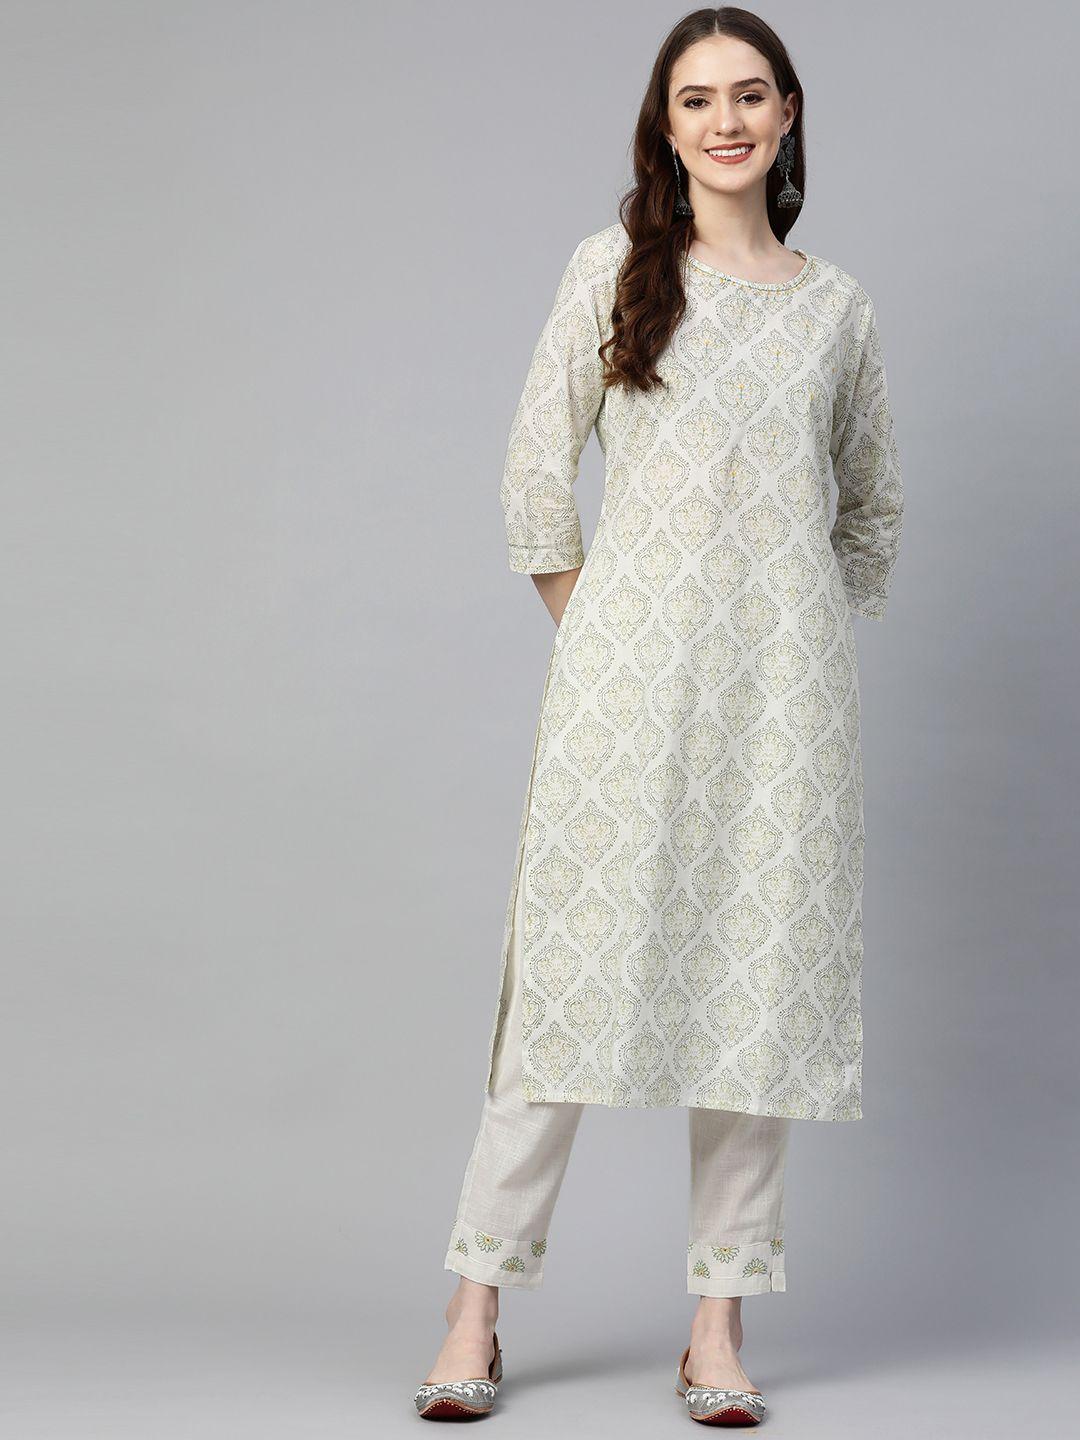 readiprint fashions women off white ethnic motifs printed thread work pure cotton kurta with trousers